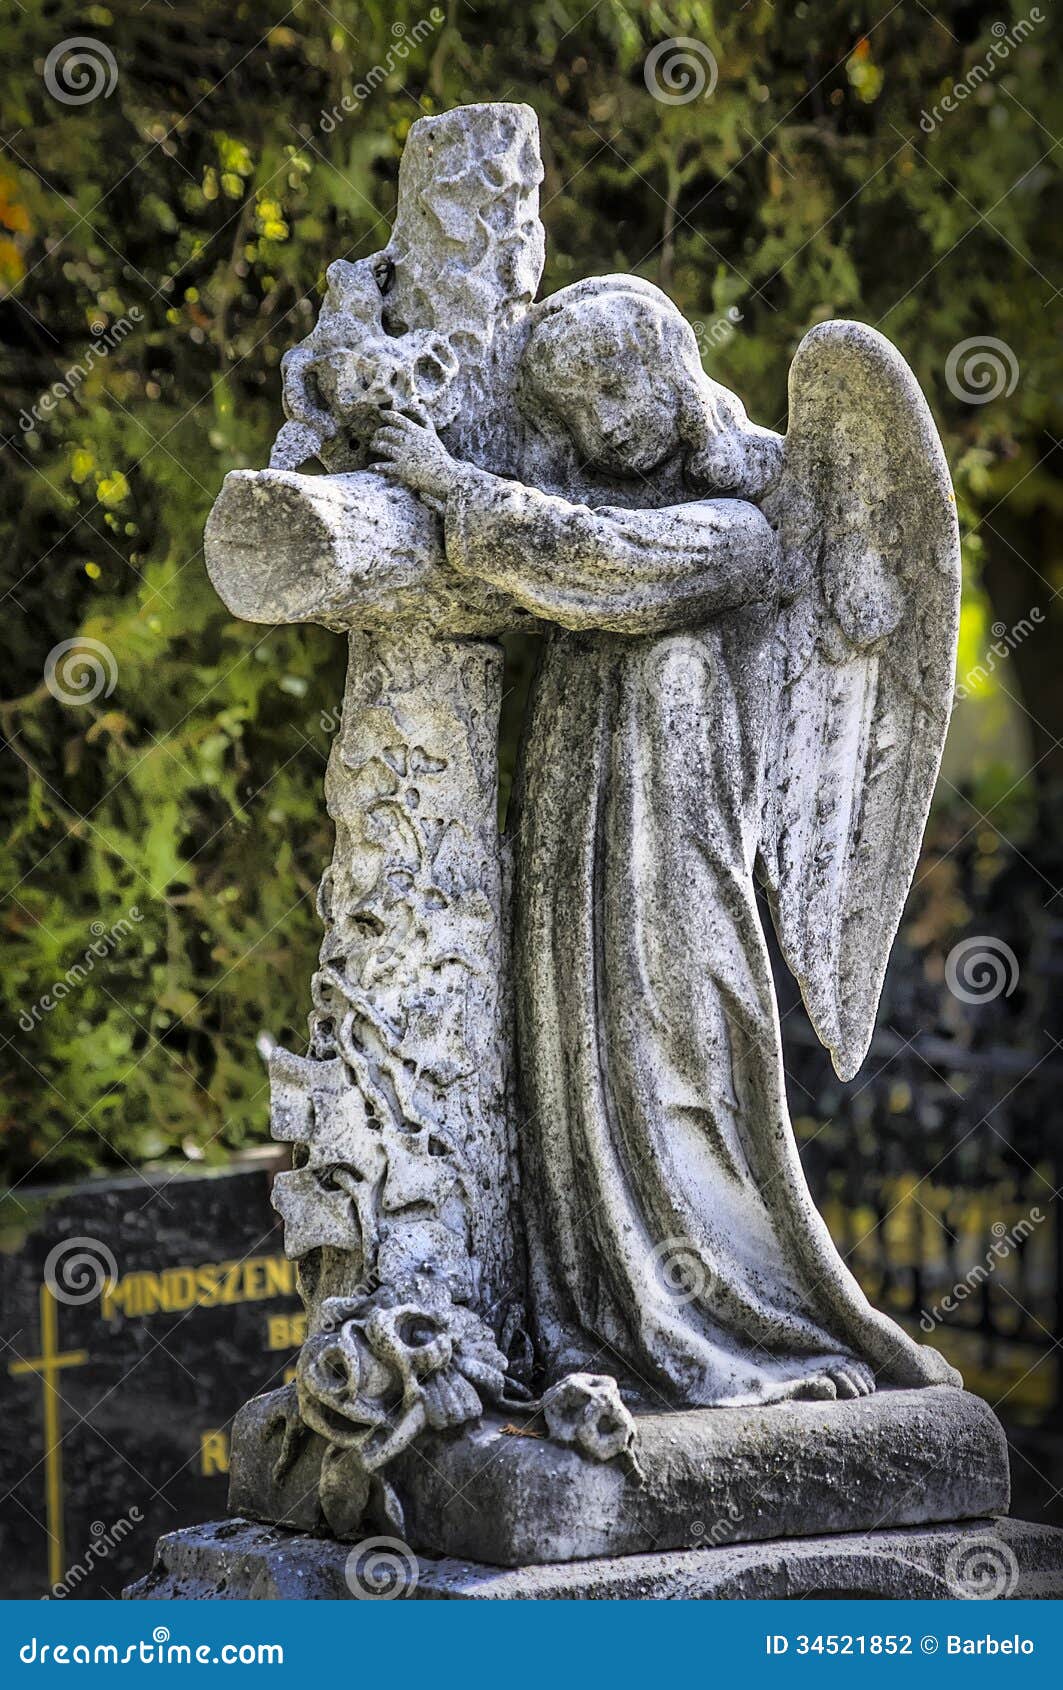 Concrete statue stock photo. Image of death, churchyard ...